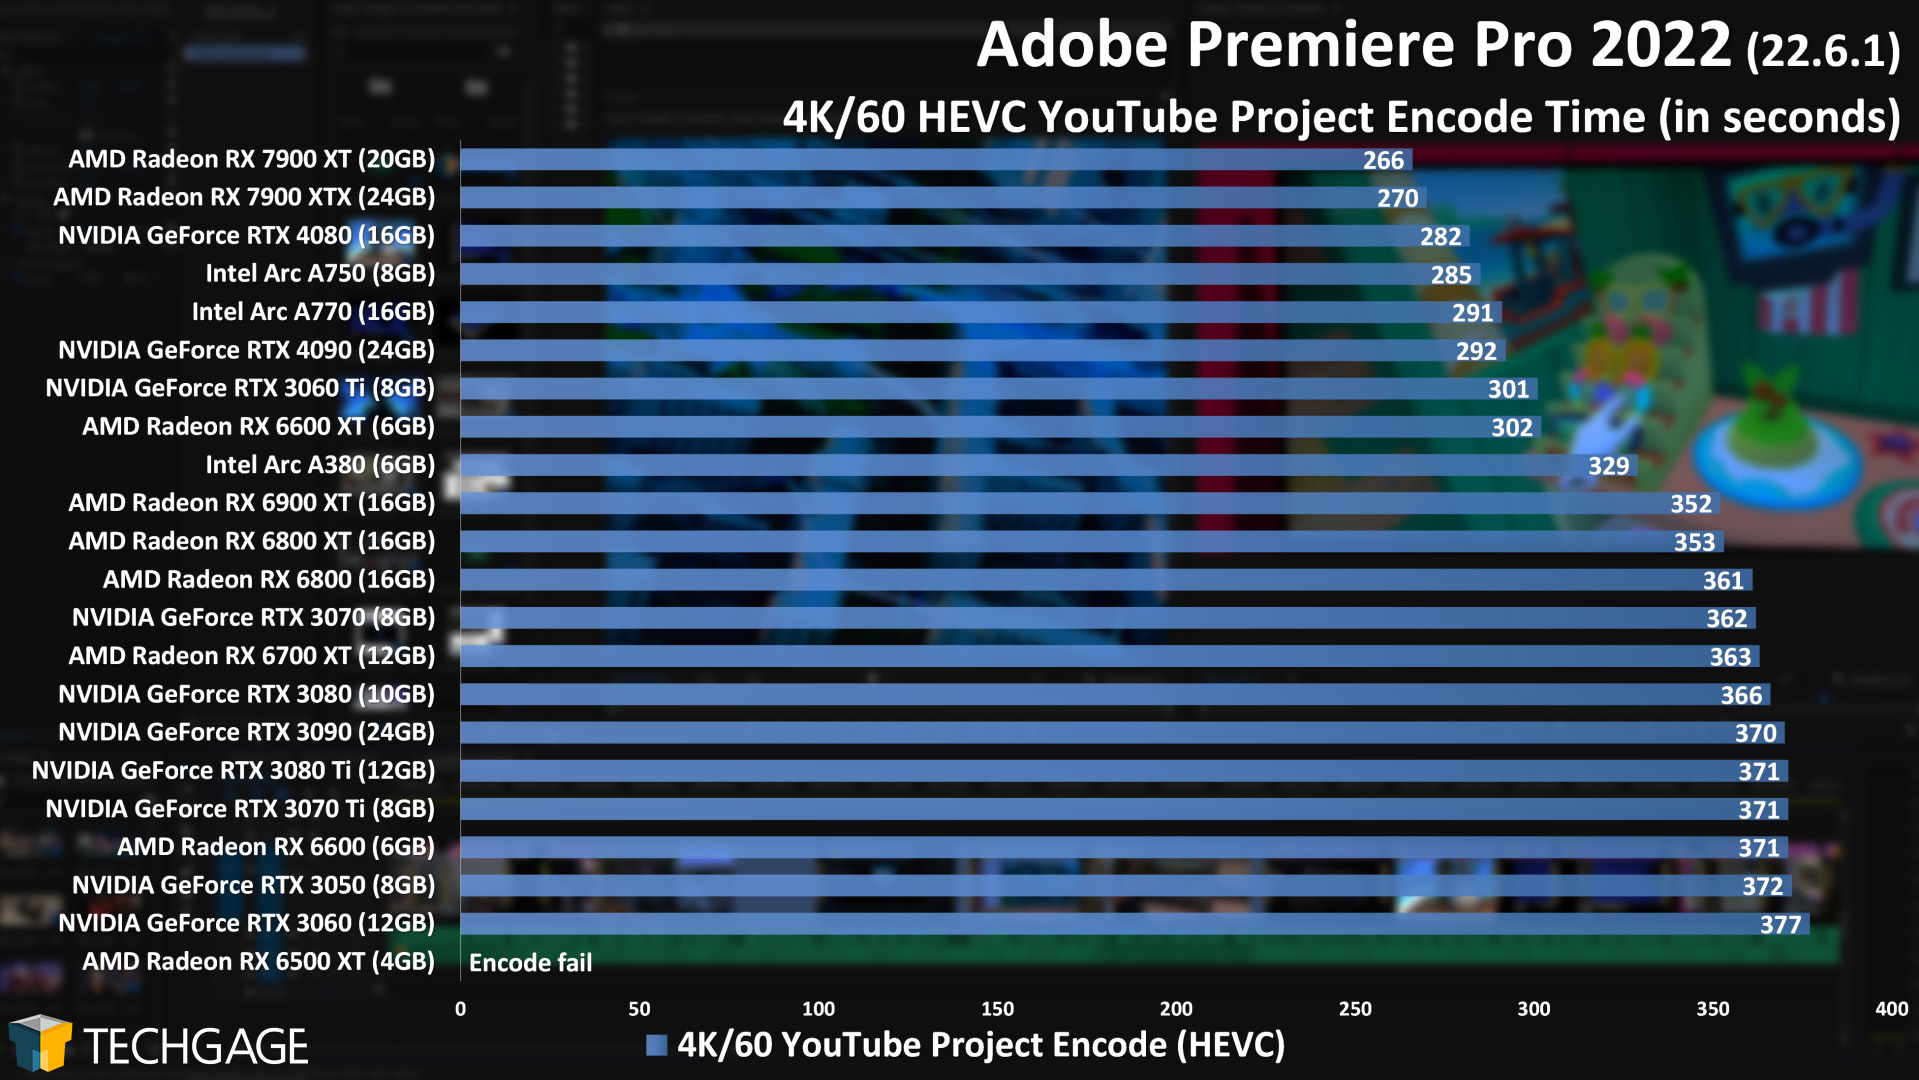 Adobe Premiere Pro 2022 - 4K YouTube GPU Encode (AVC) Performance (AMD Radeon RX 7900 XT and XTX)